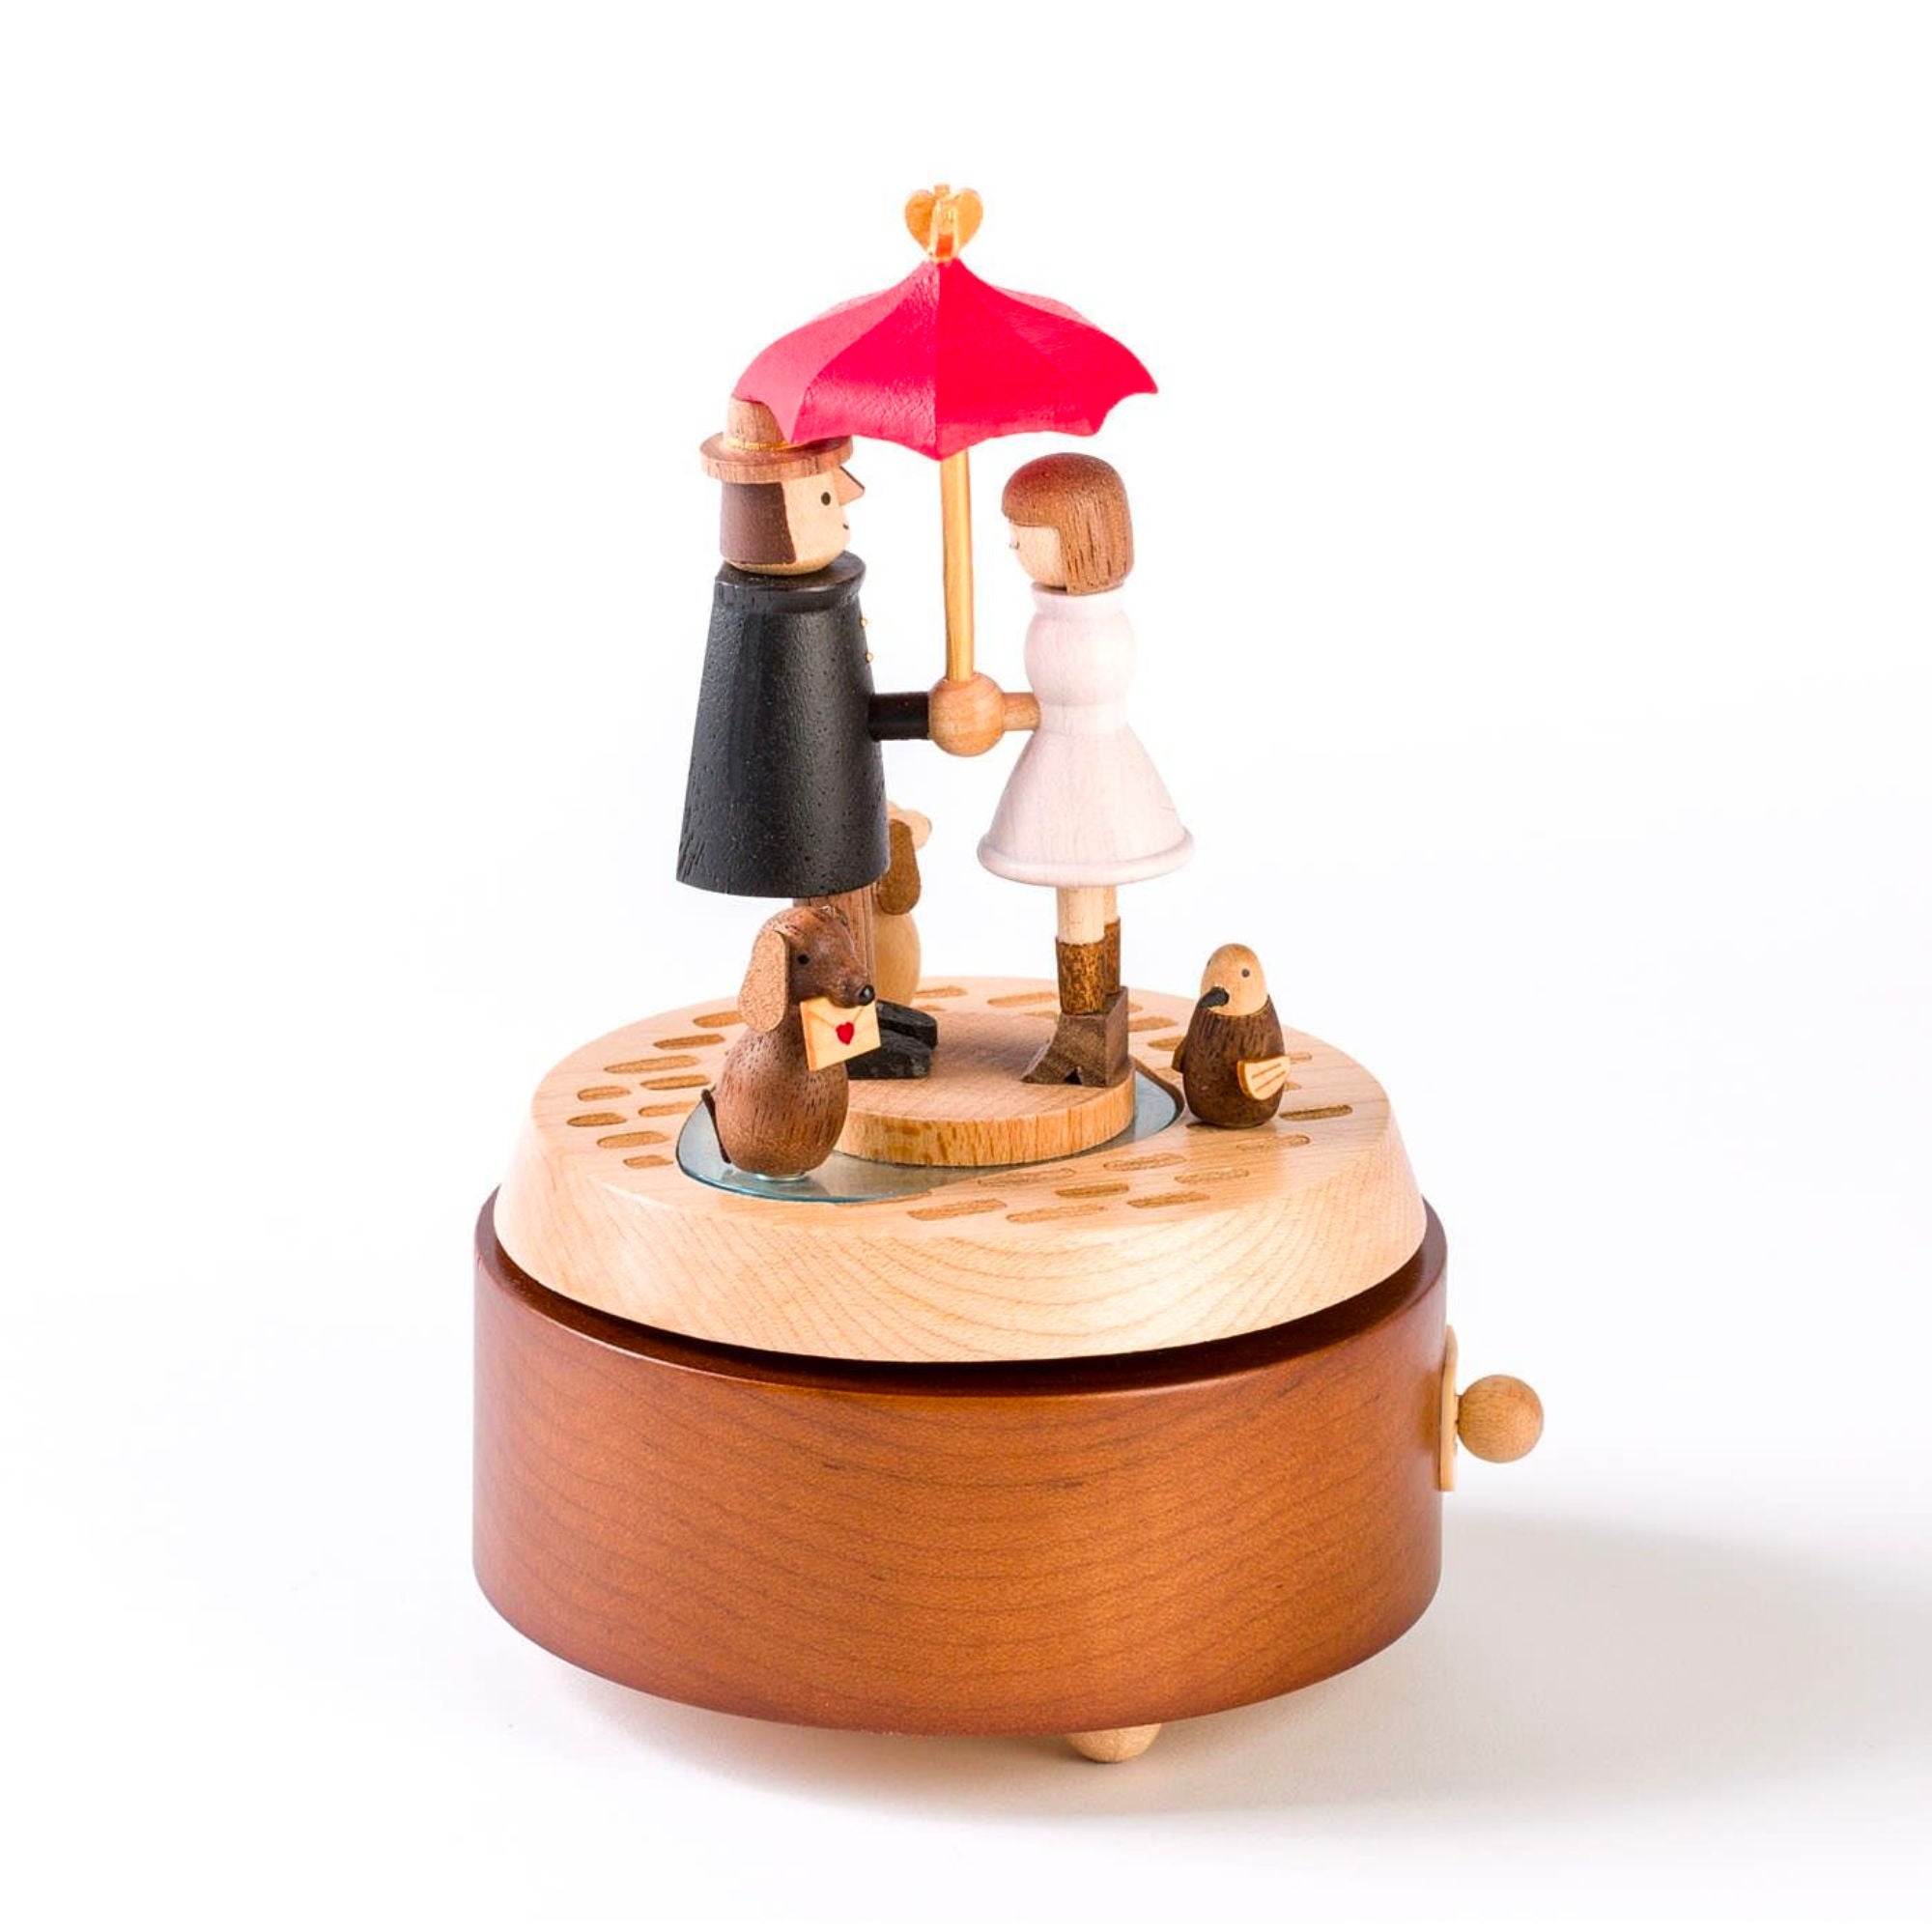 Woodeful Life wooden music box, love under the umbrella